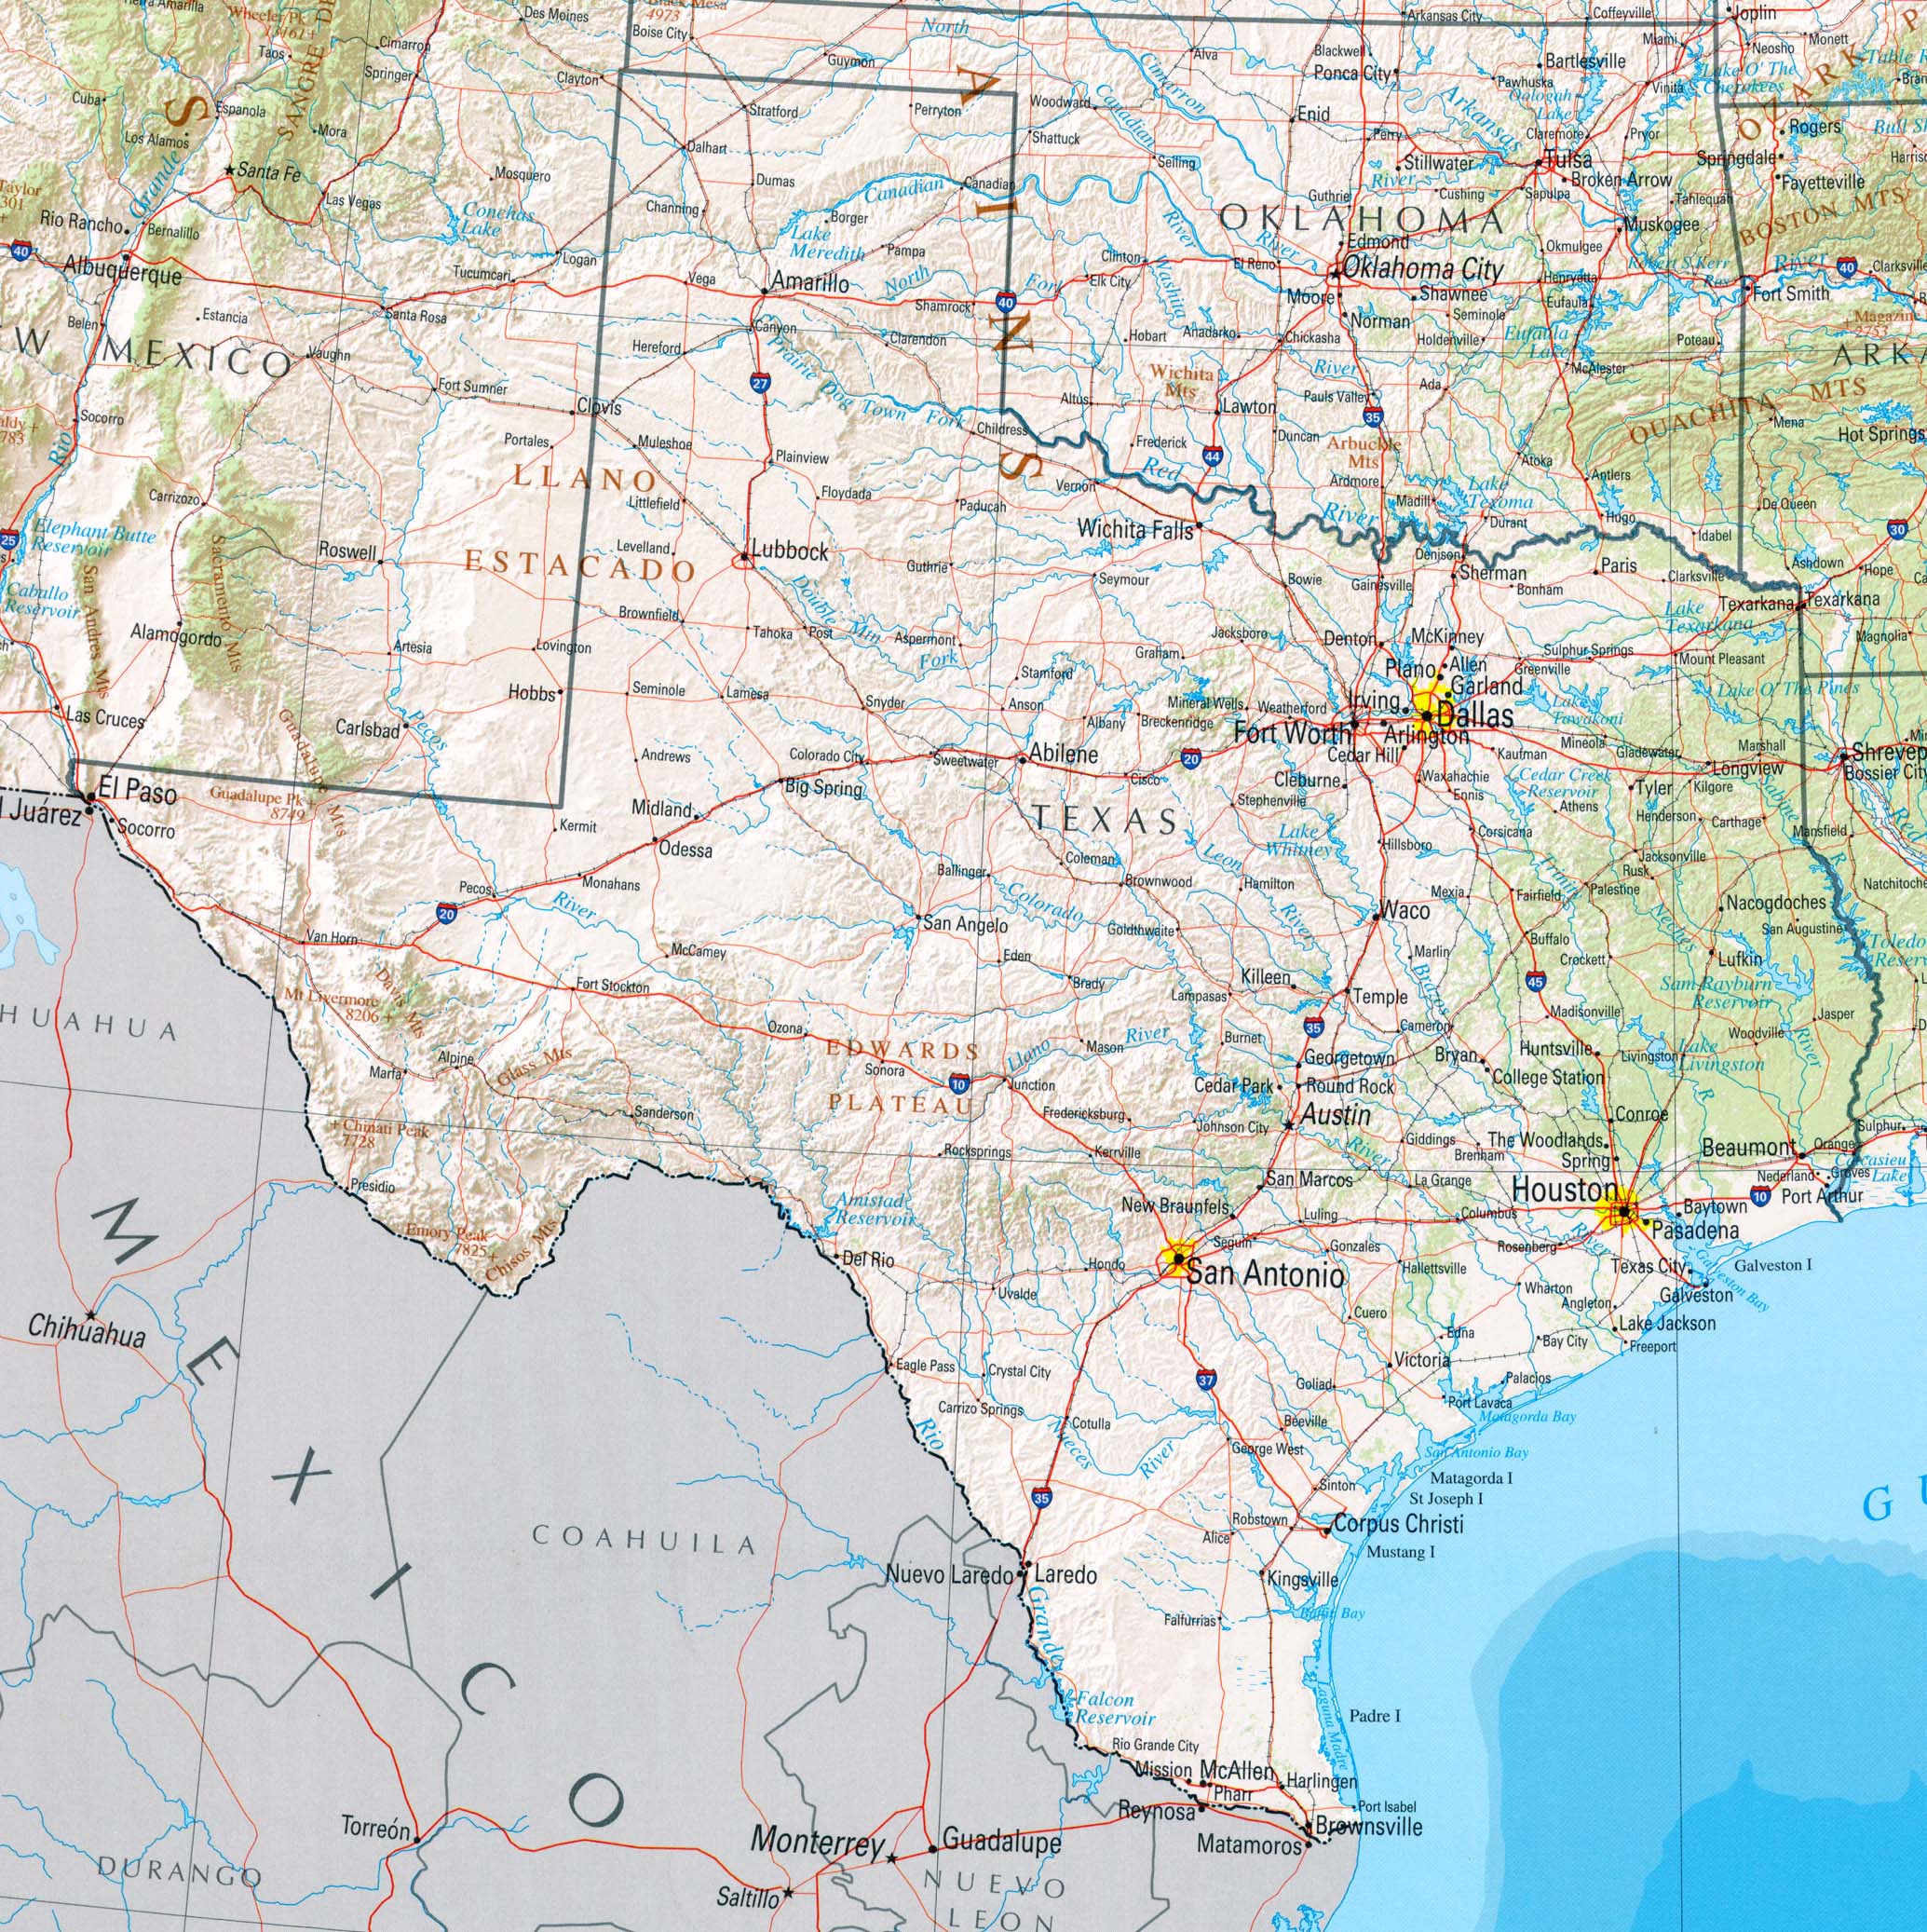 Texas Physical Map Texas mappery